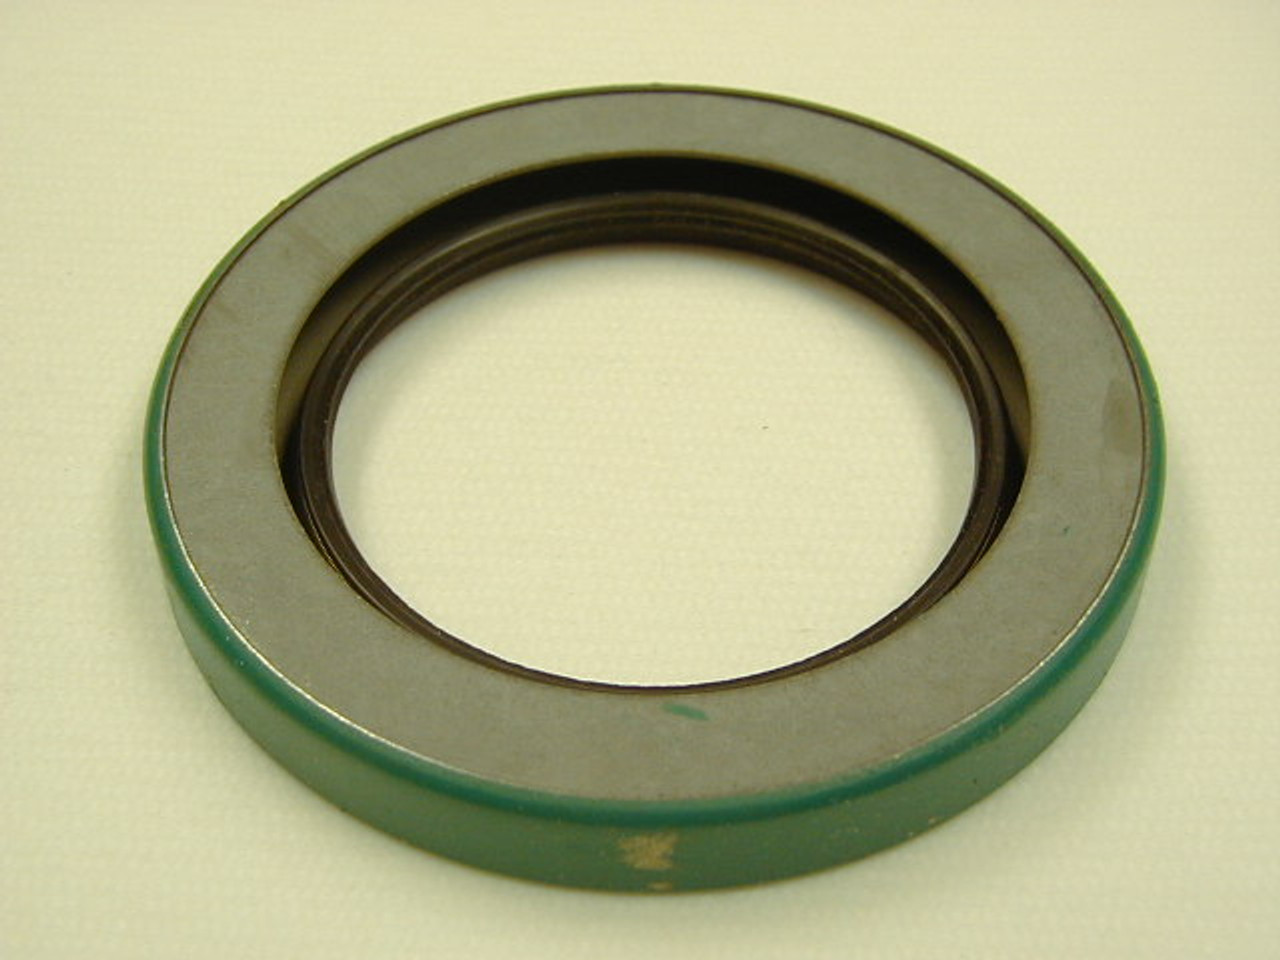 4.00" (101.6mm) Inch Reinforced Metal Single Lip Nitrile Oil Seal  40138 CRWH1 R